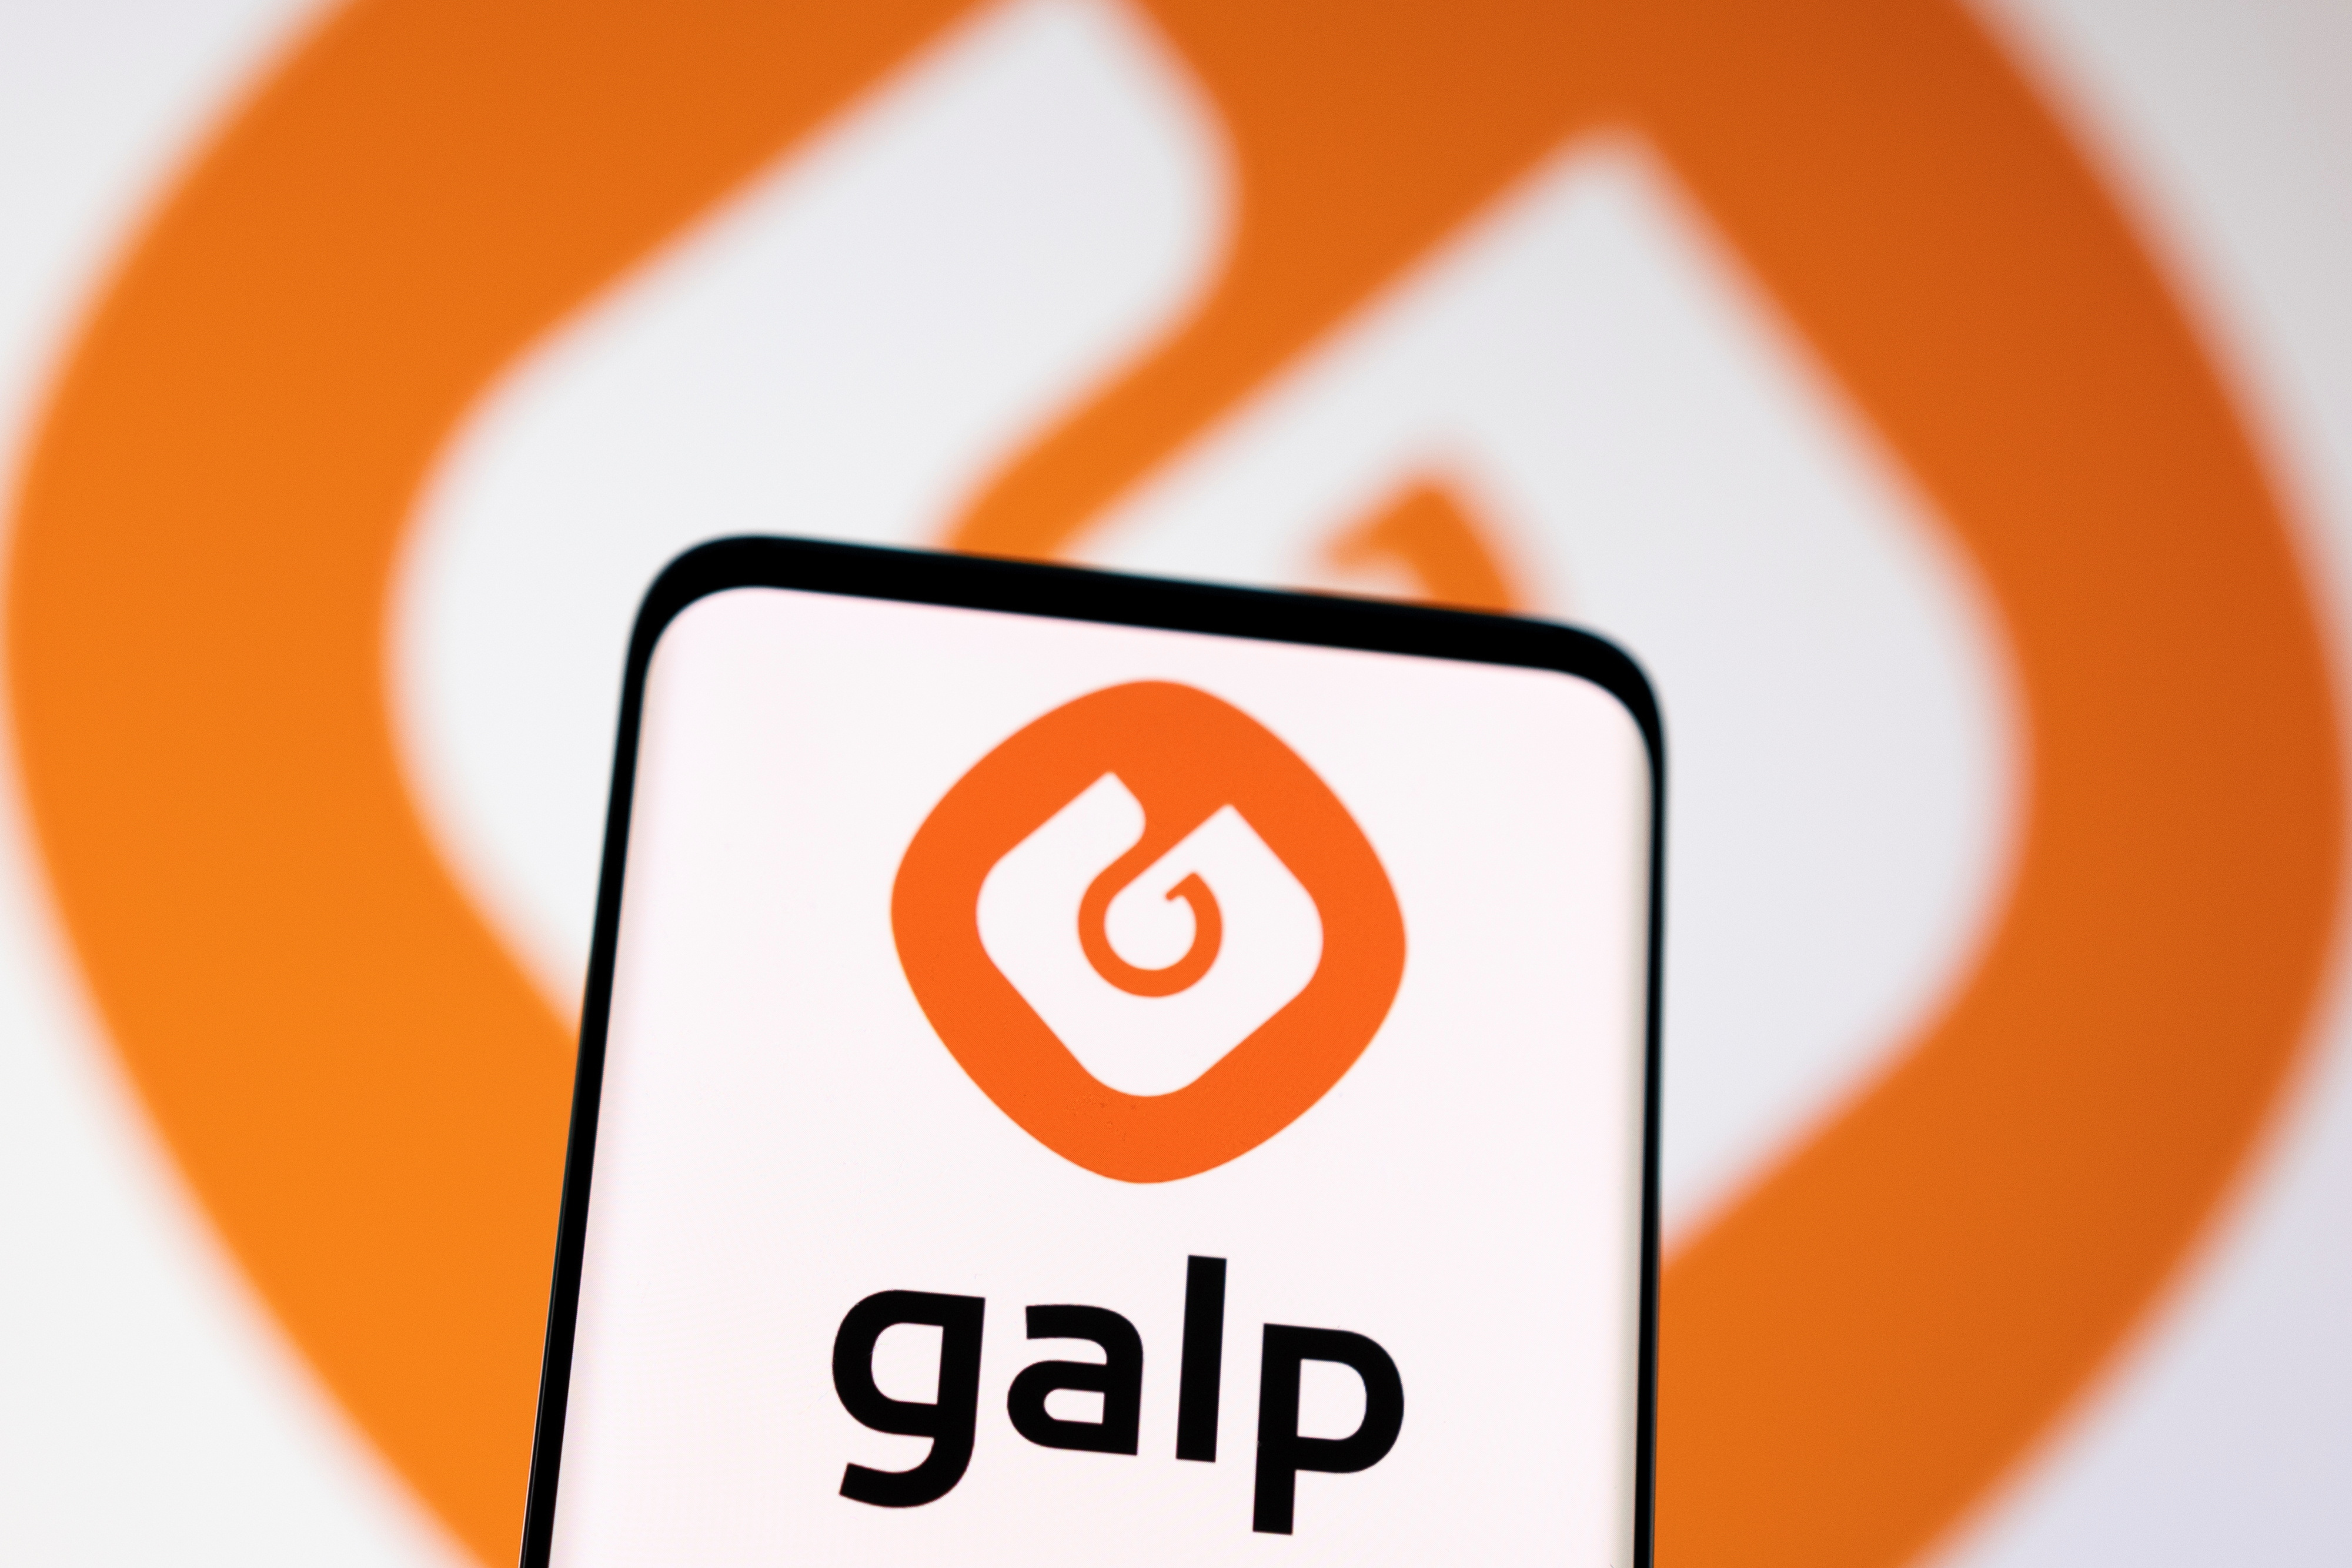 Illustration shows Galp Energia logo